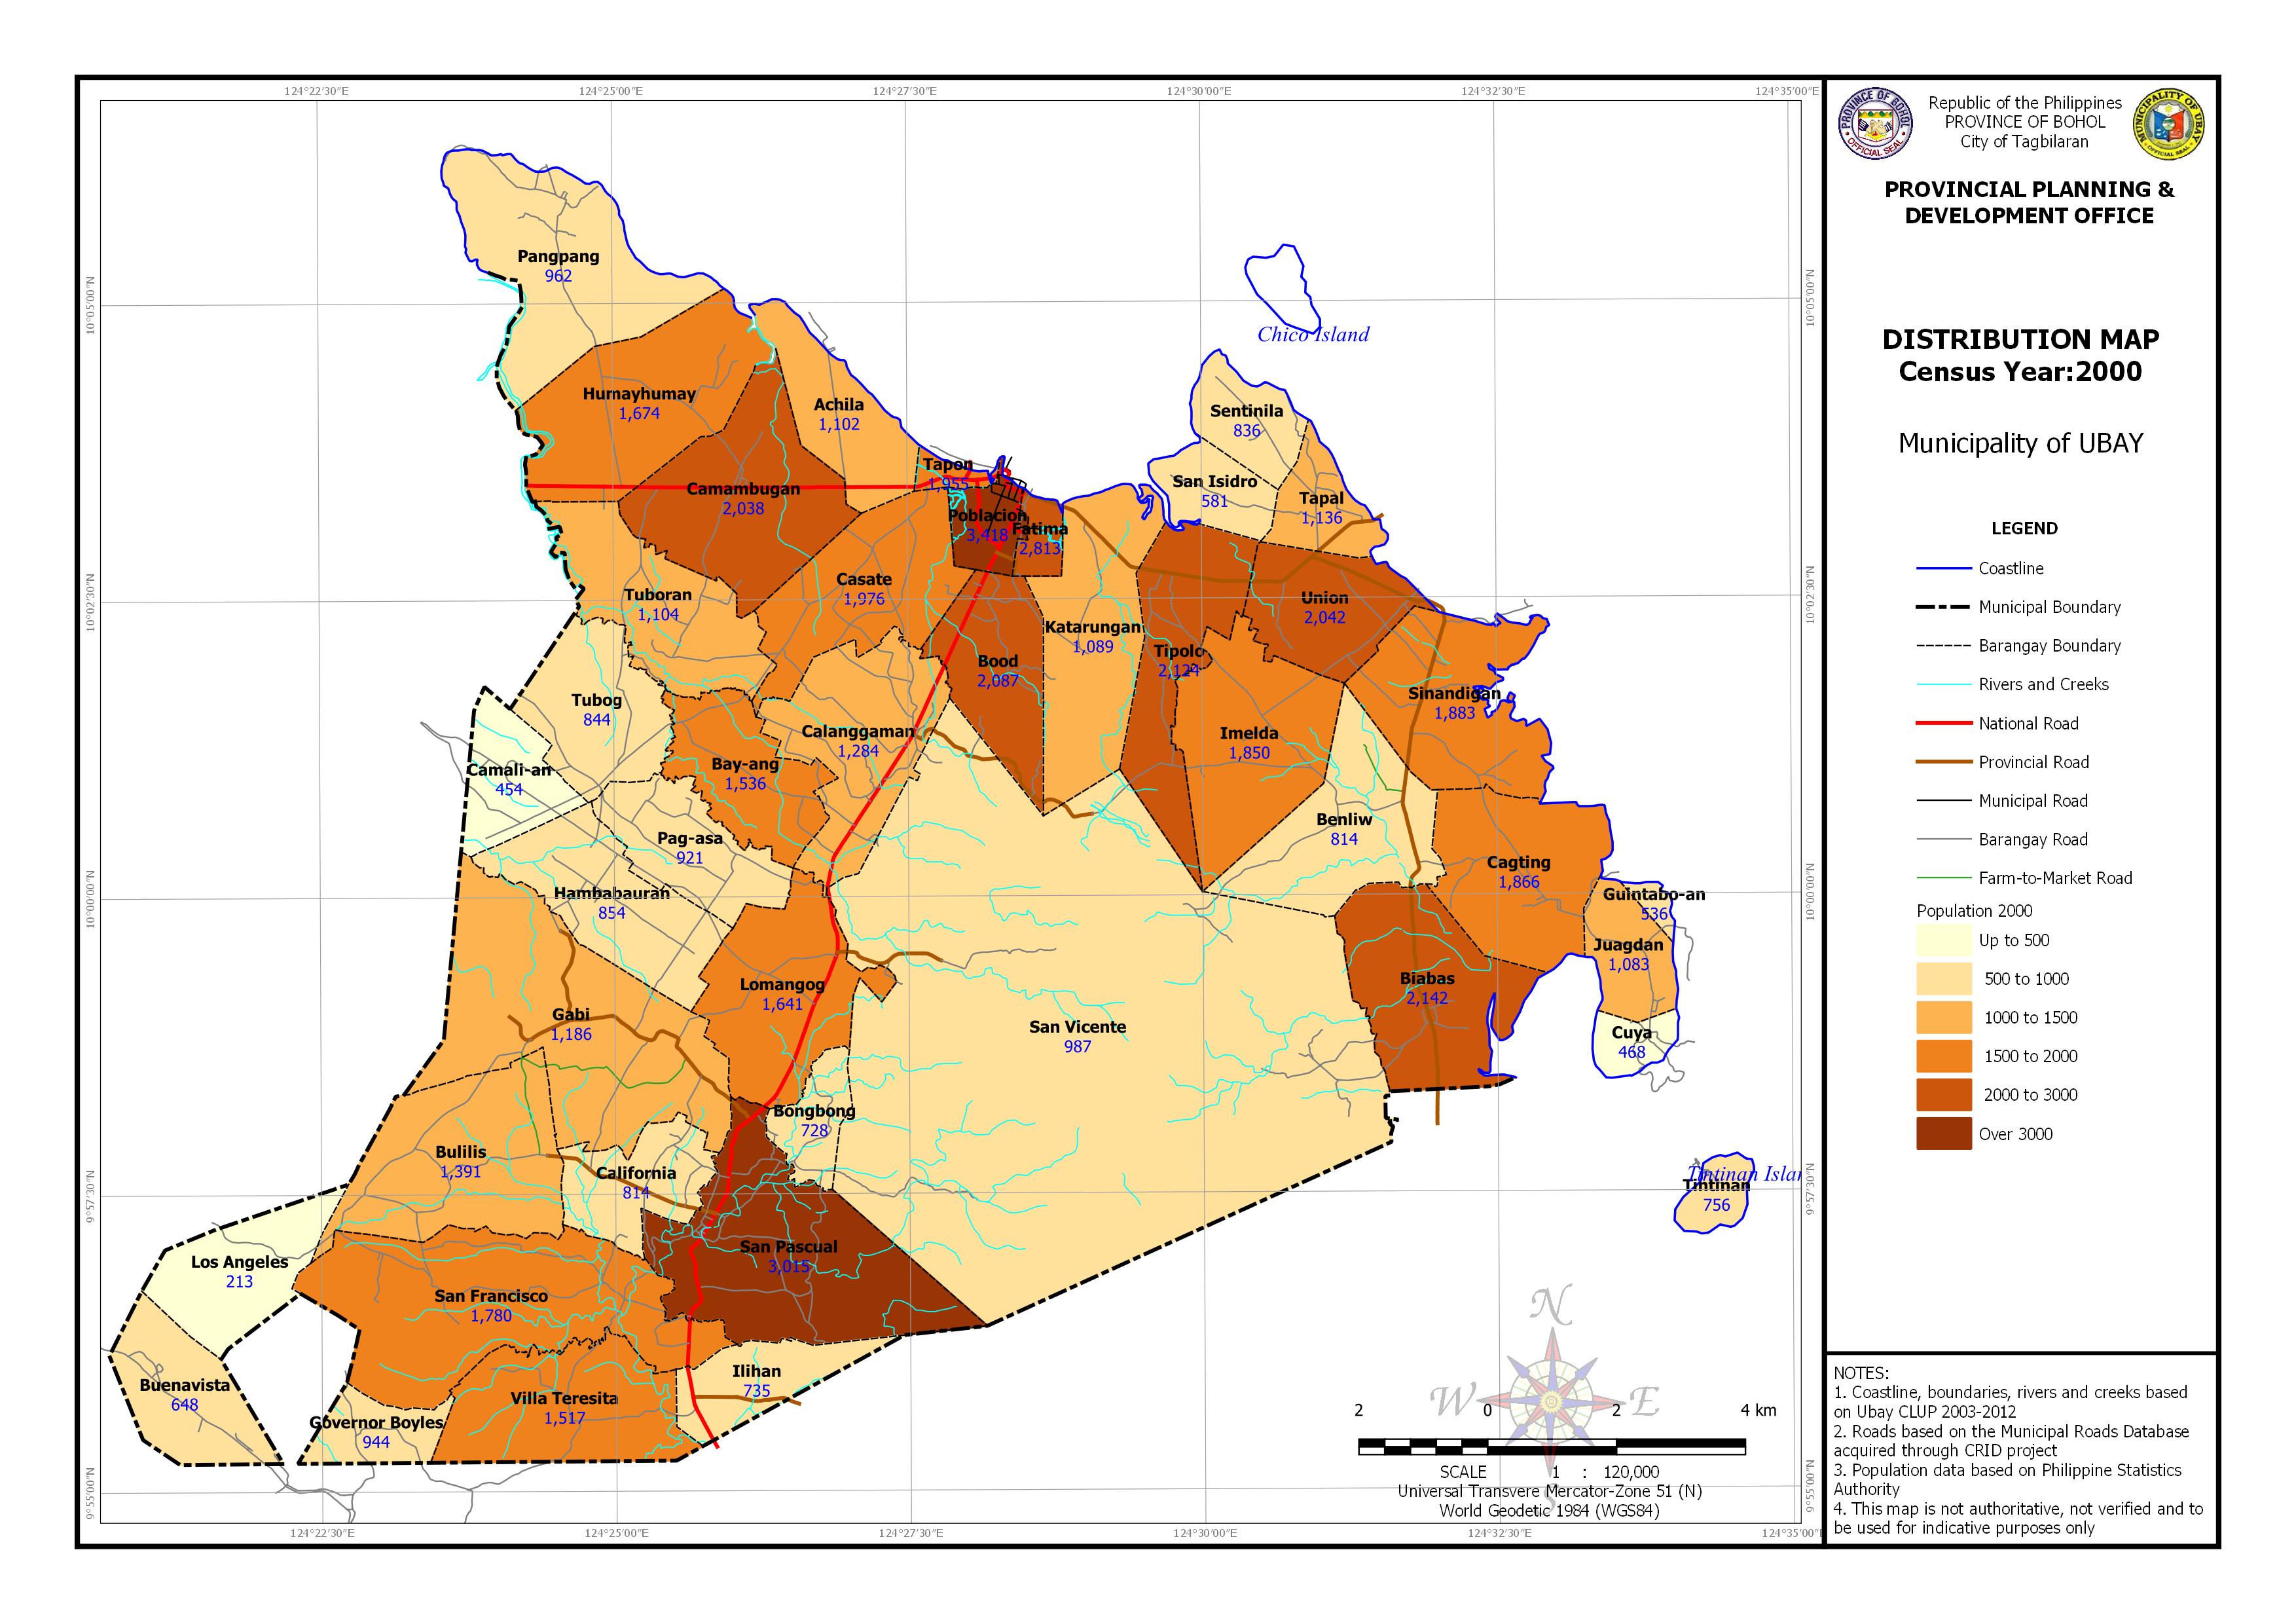 Population Distribution Census Year:2000 Map